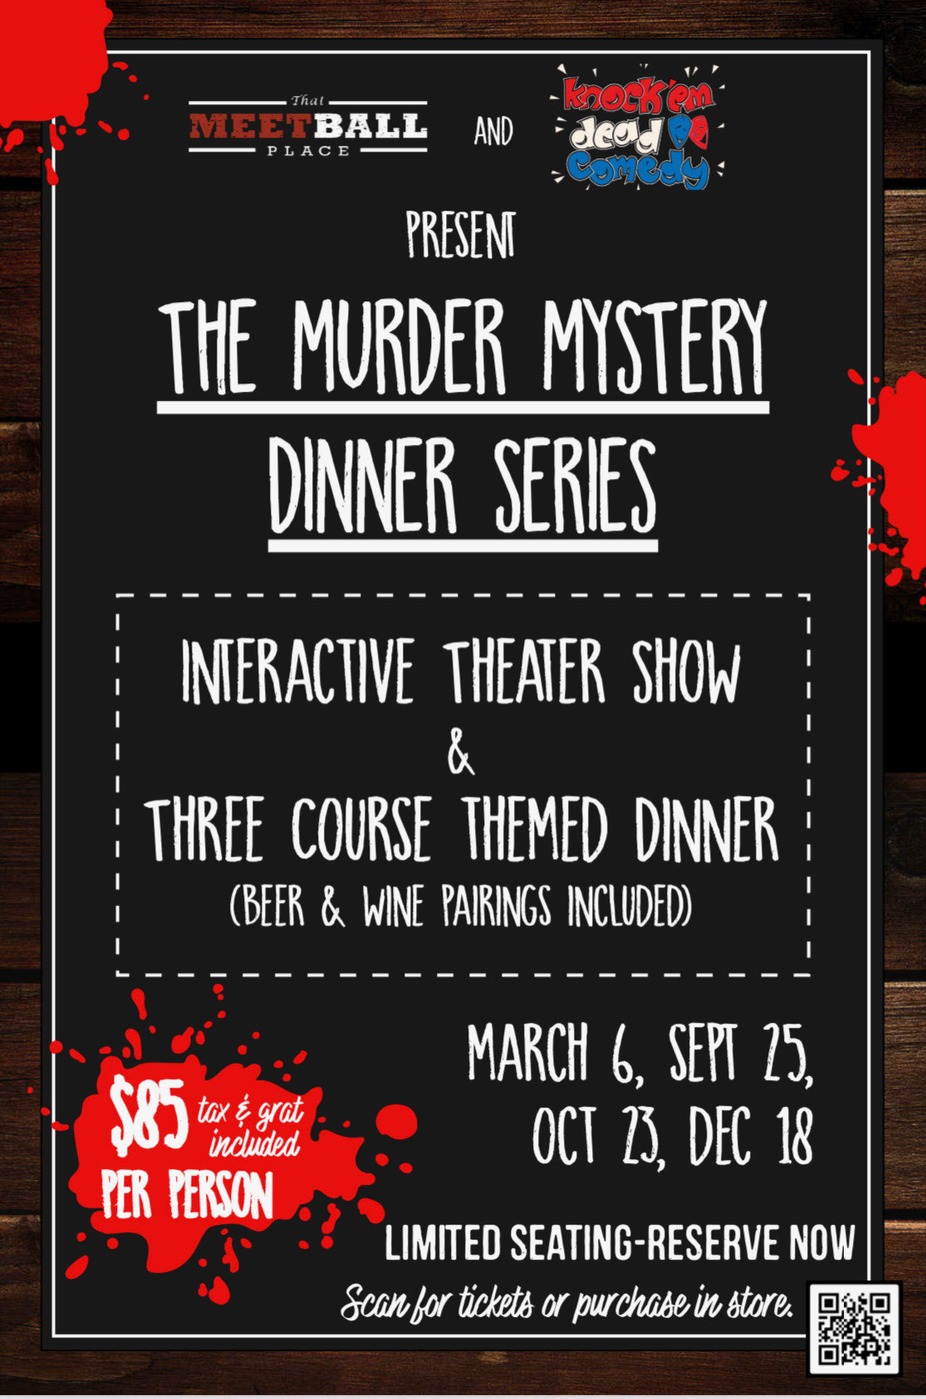 The Murder Mistery Dinner Series event photo